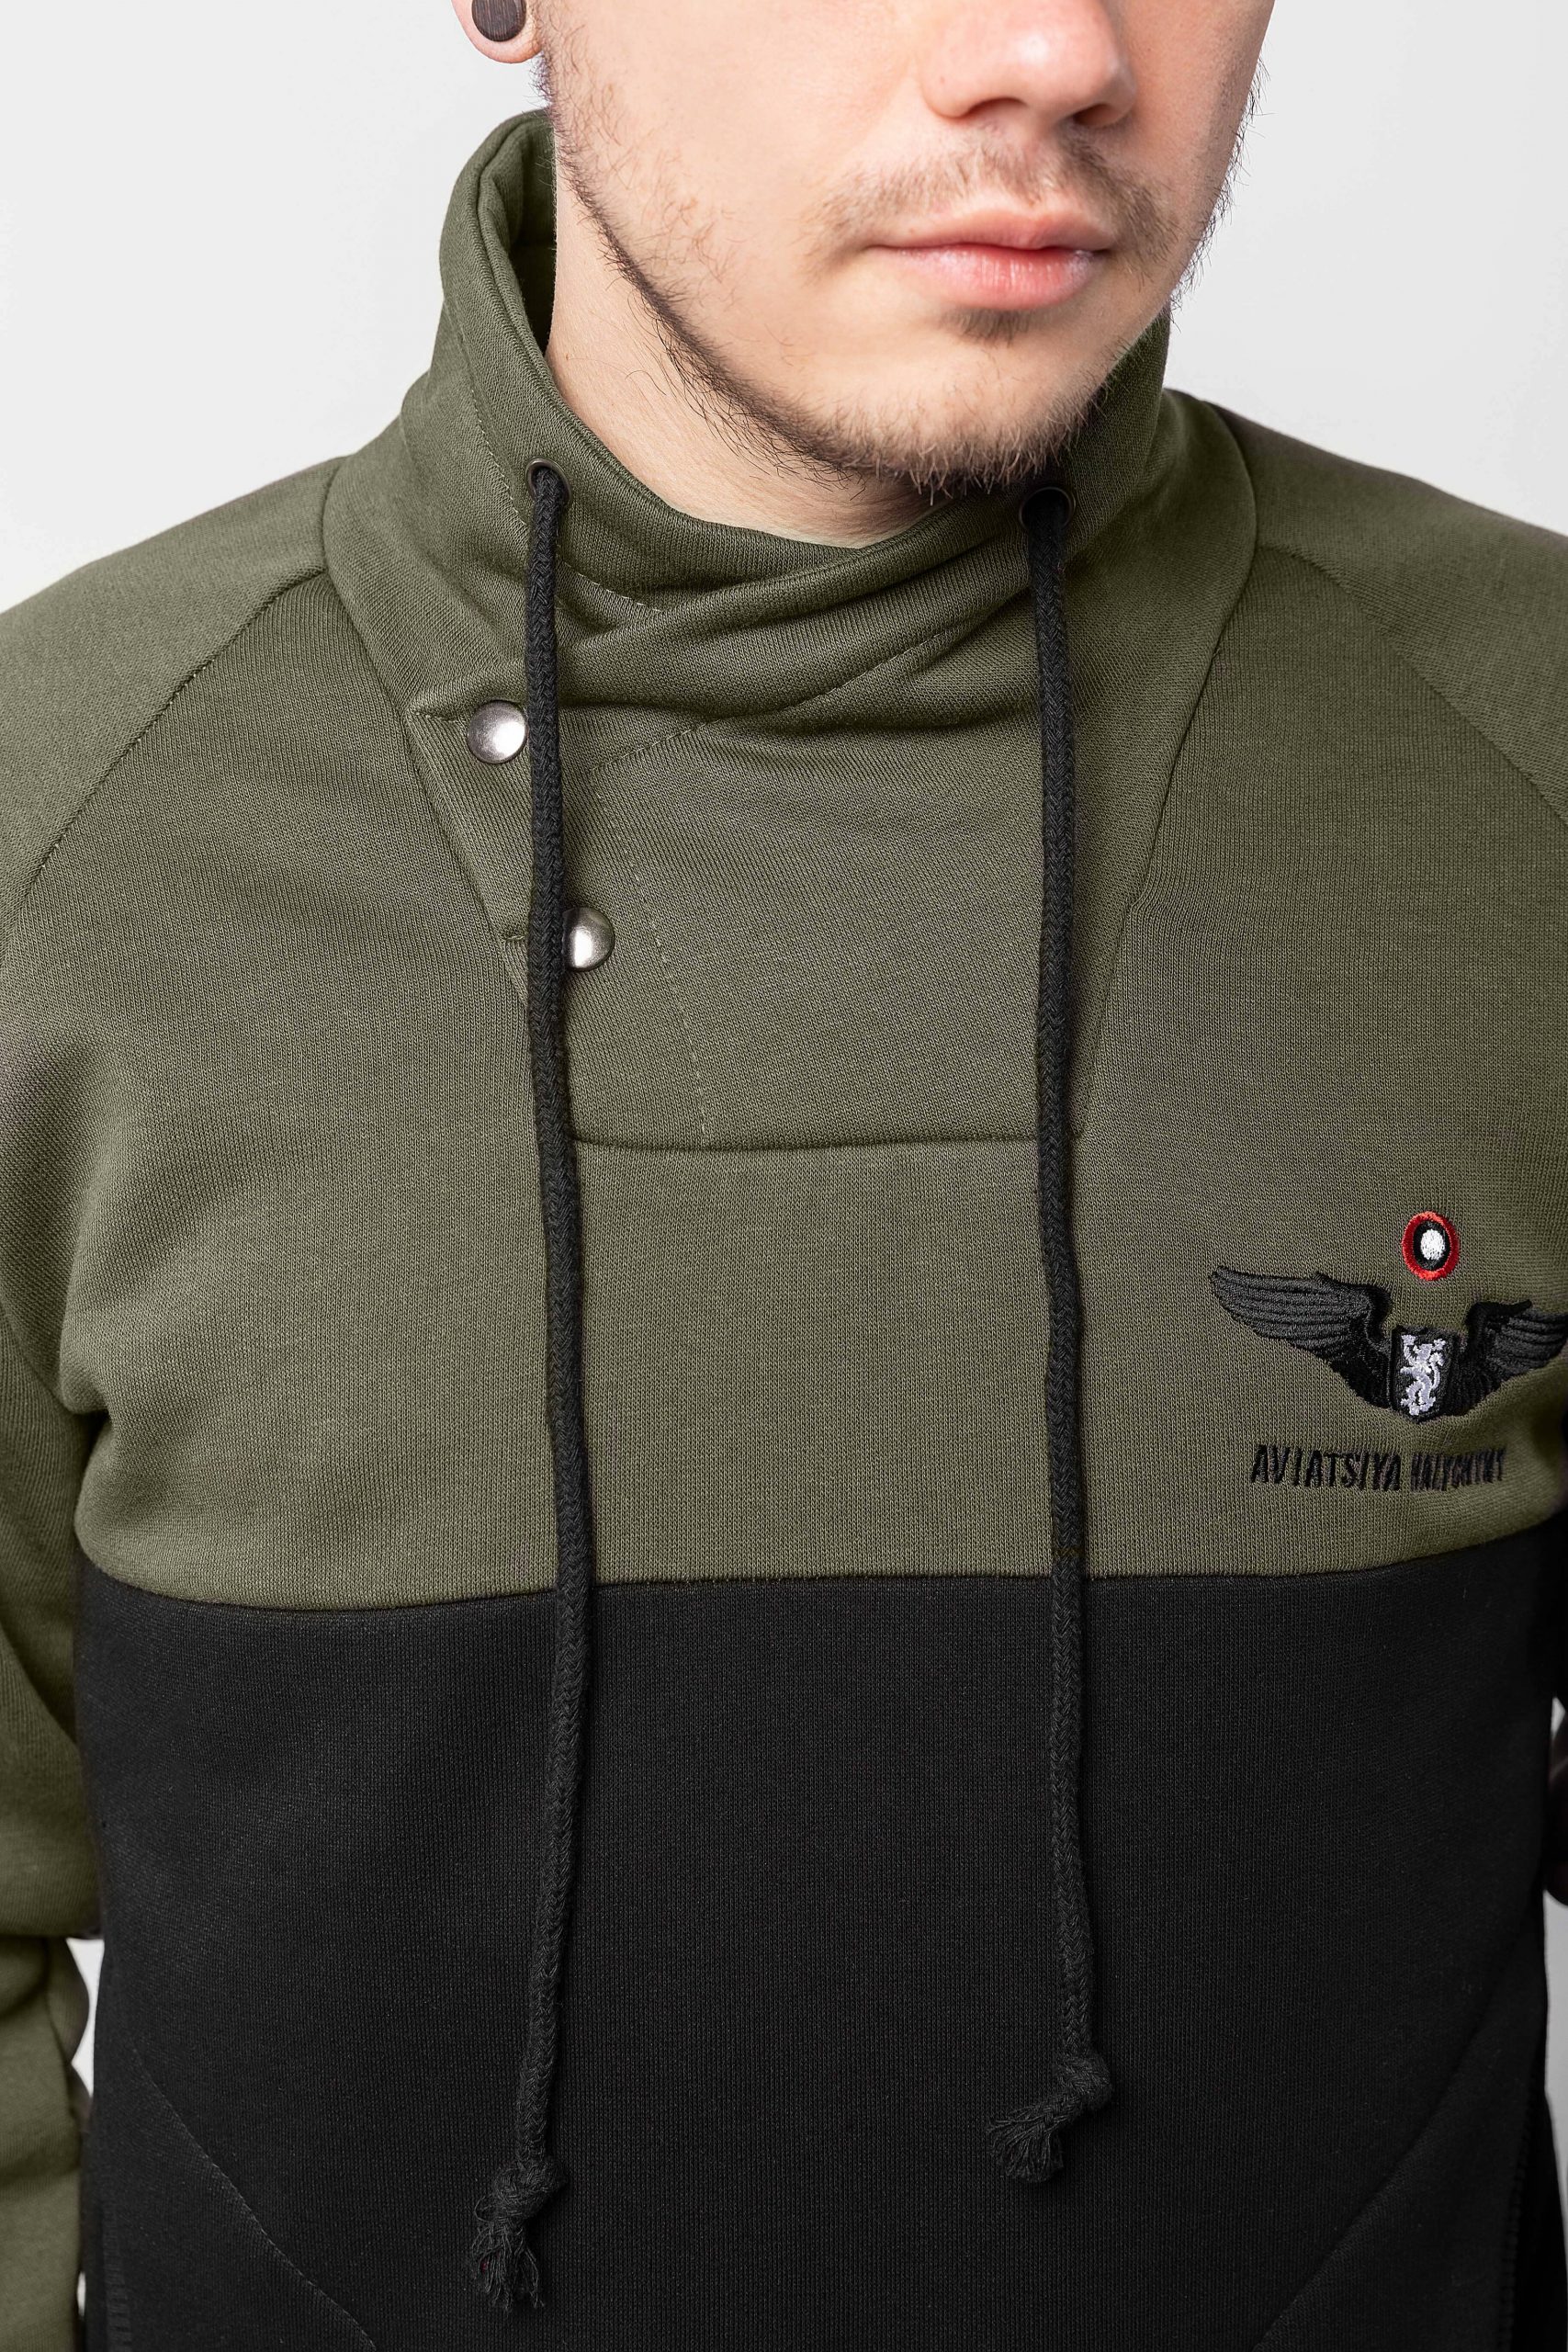 Men's Sweatshirt Sikorsky. Color khaki. 
Size worn by the model: L.